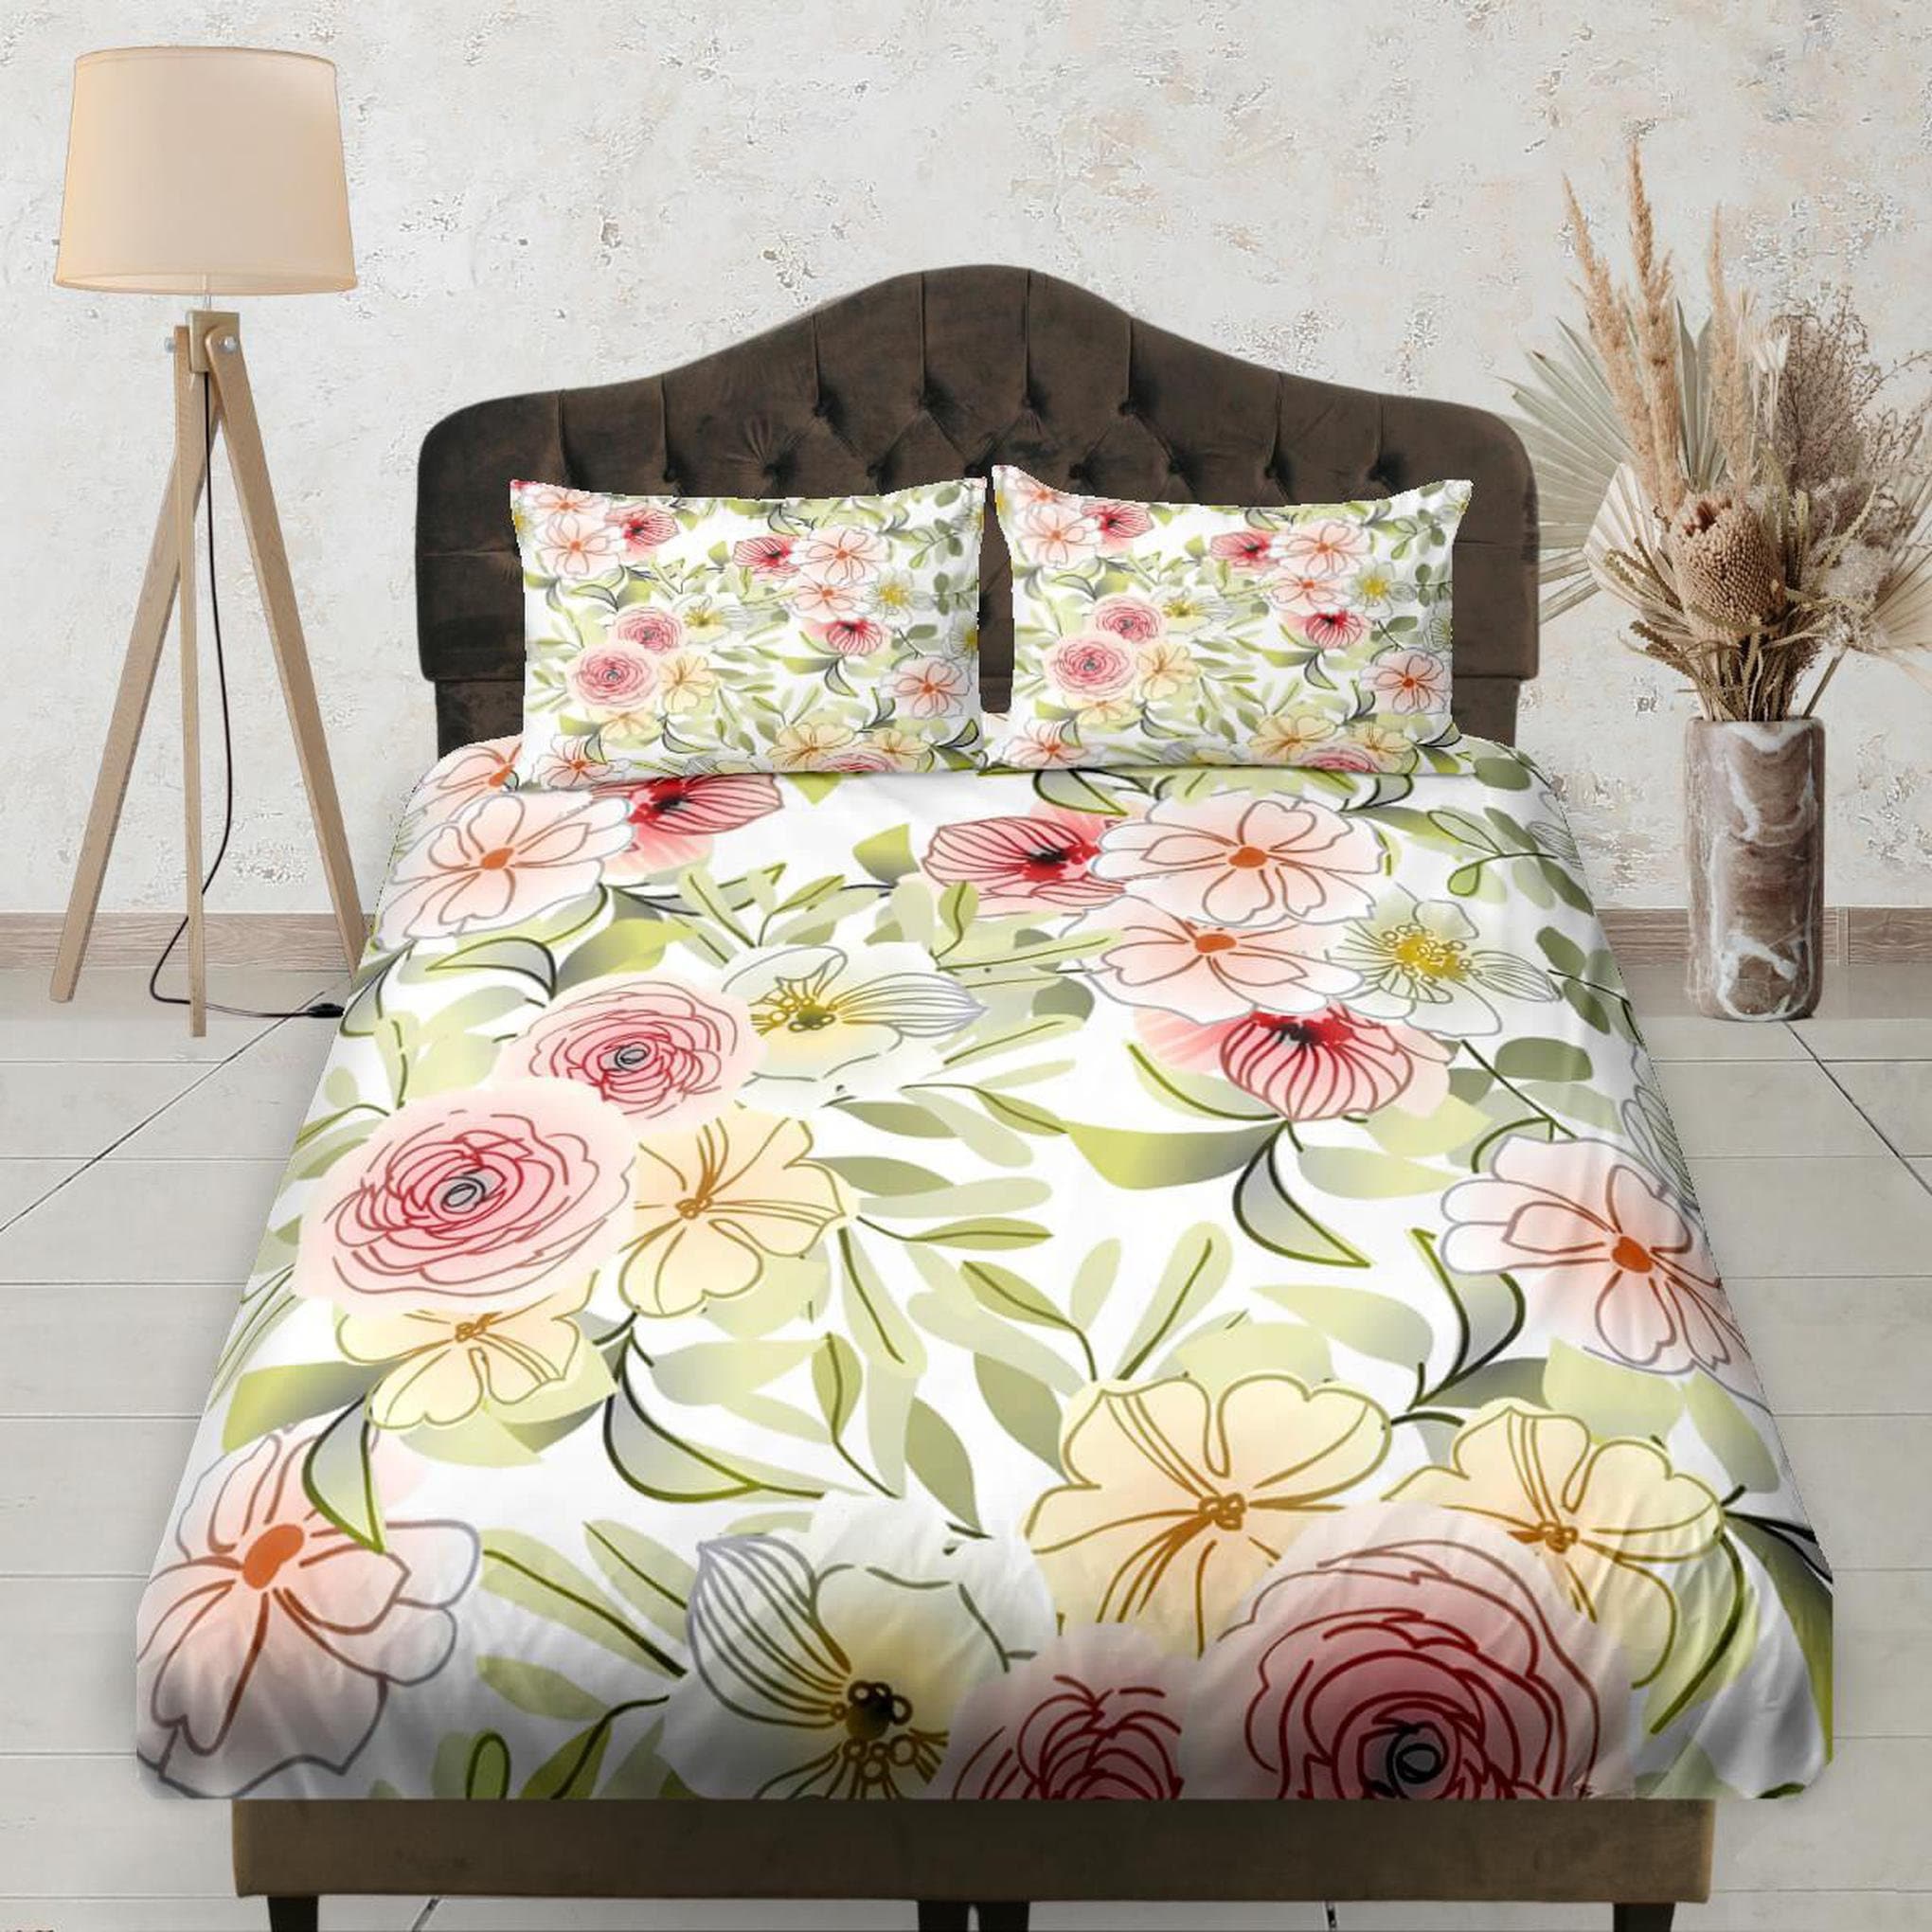 daintyduvet Pastel Colors, Floral Printed Fitted Sheet, Aesthetic Boho Bedding Set Full, Elastic Bedsheet, Dorm Bedding, Crib Sheet, Shabby Chic Bedding